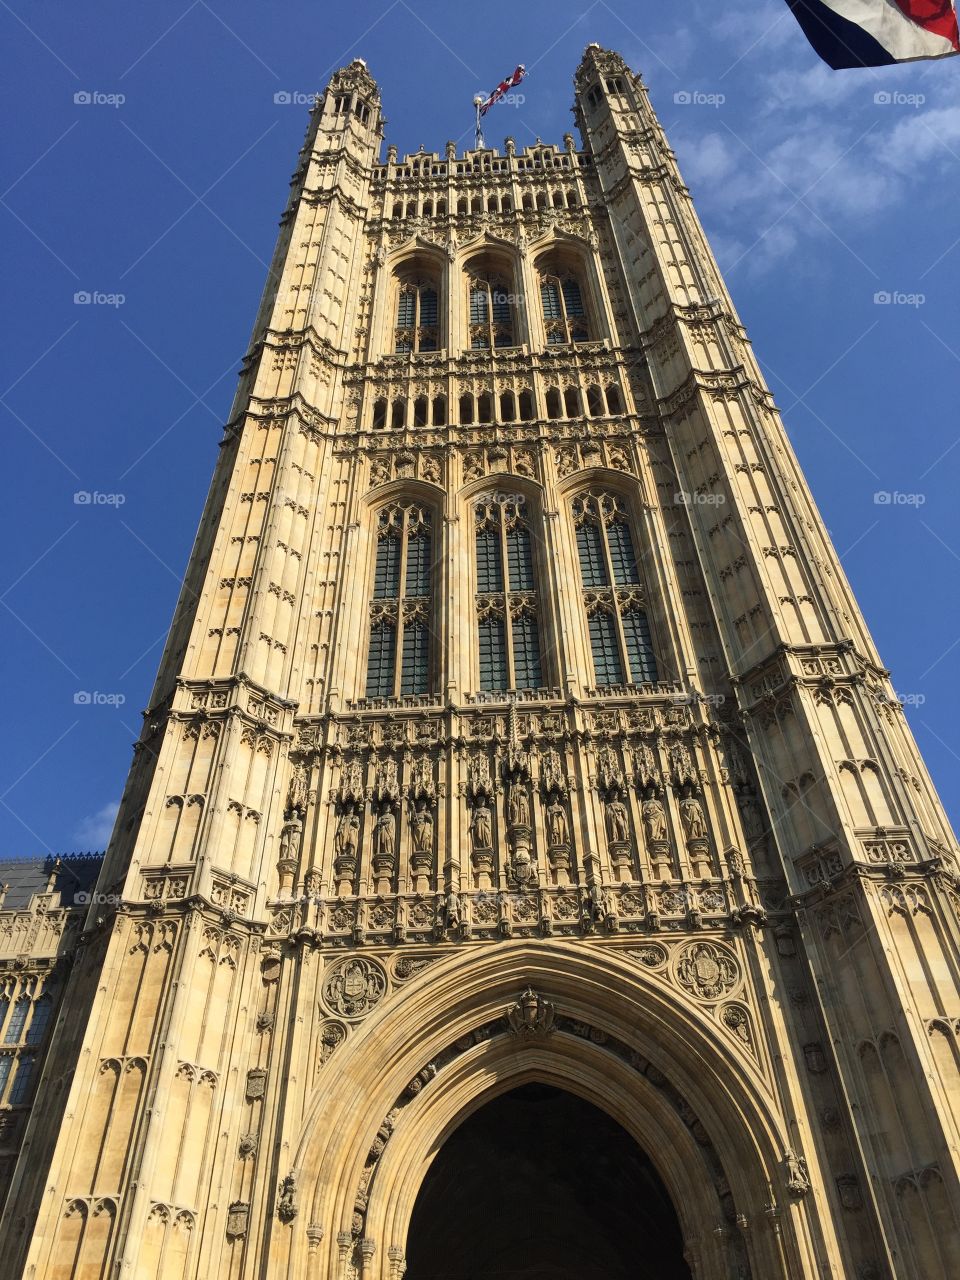 London Parliament tower